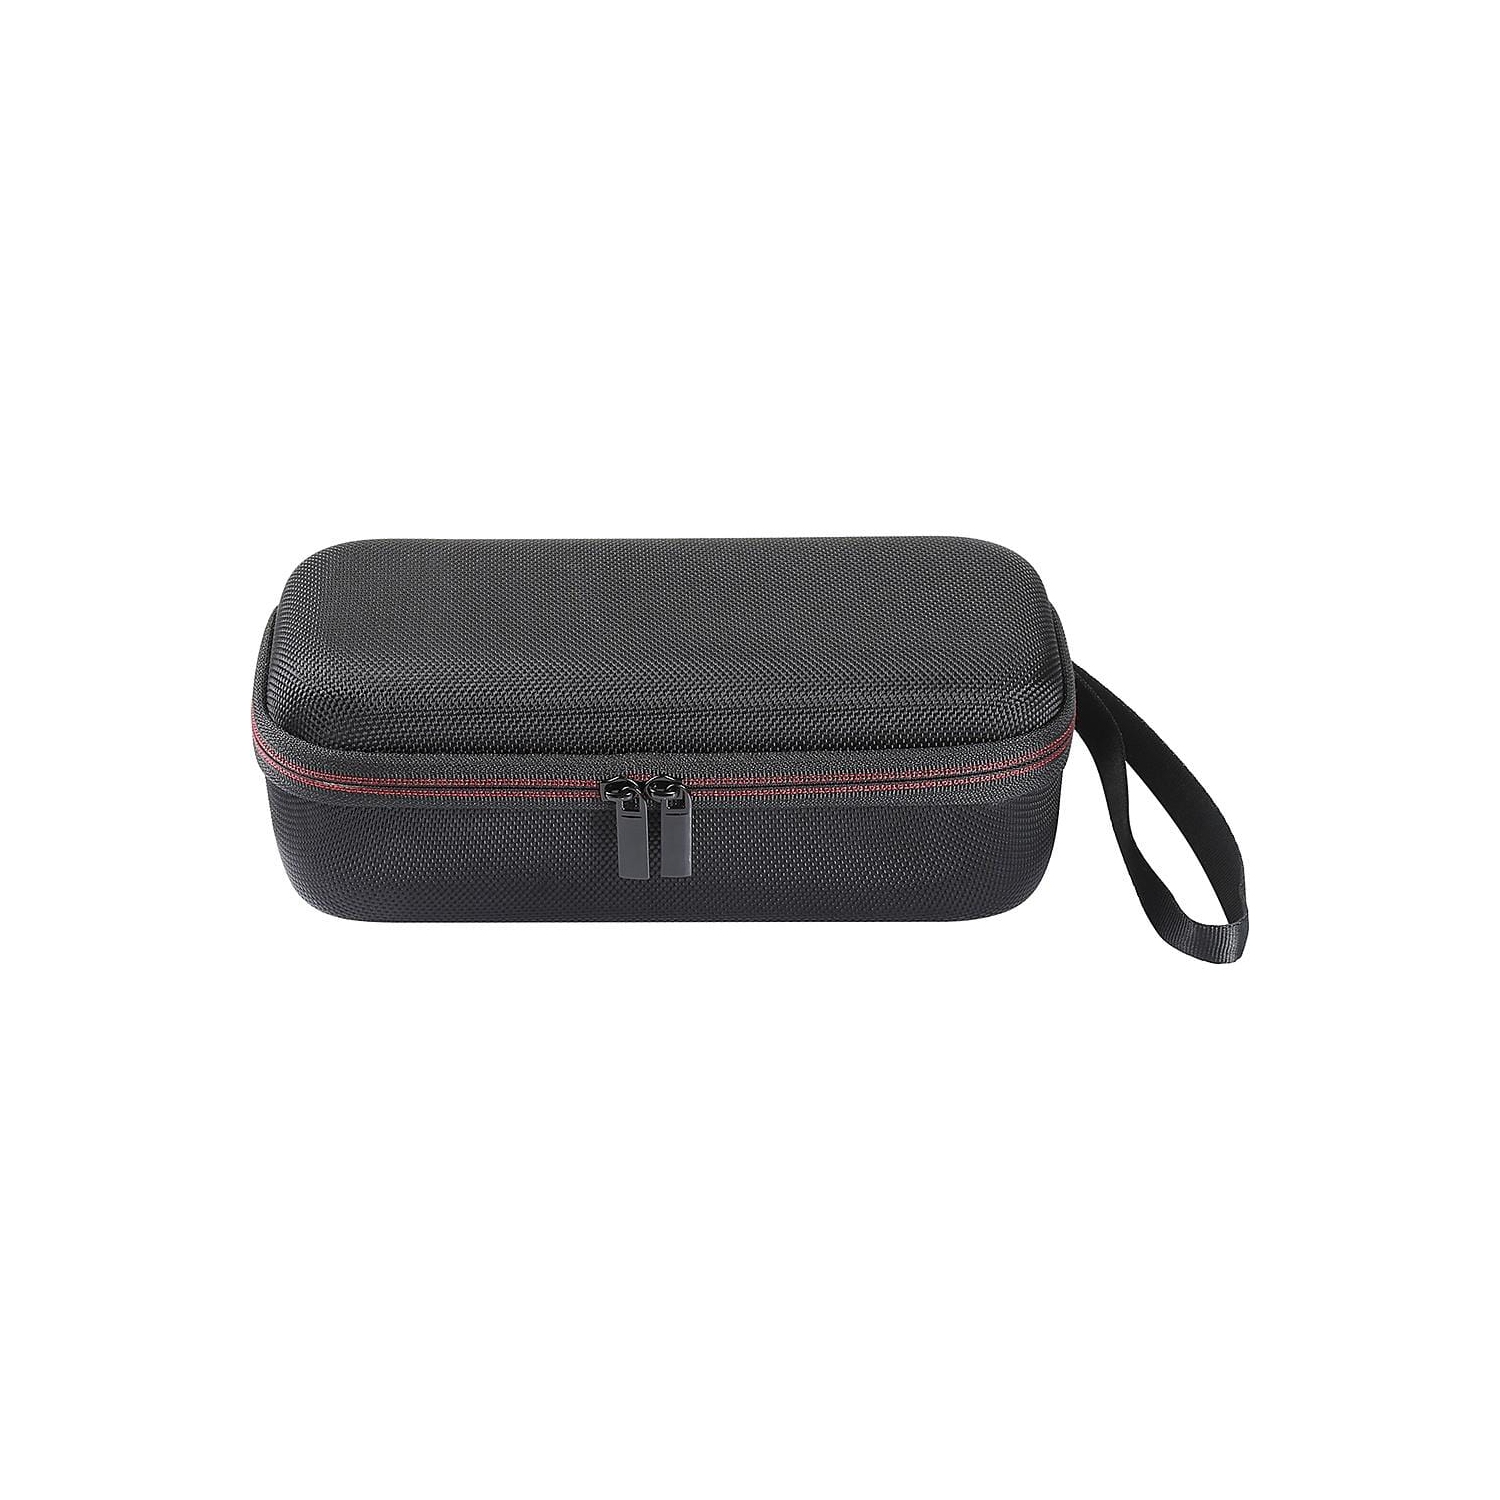 SaharaCase - Travel Carry Case for Bose SoundLink Flex Portable Bluetooth Speaker - Black